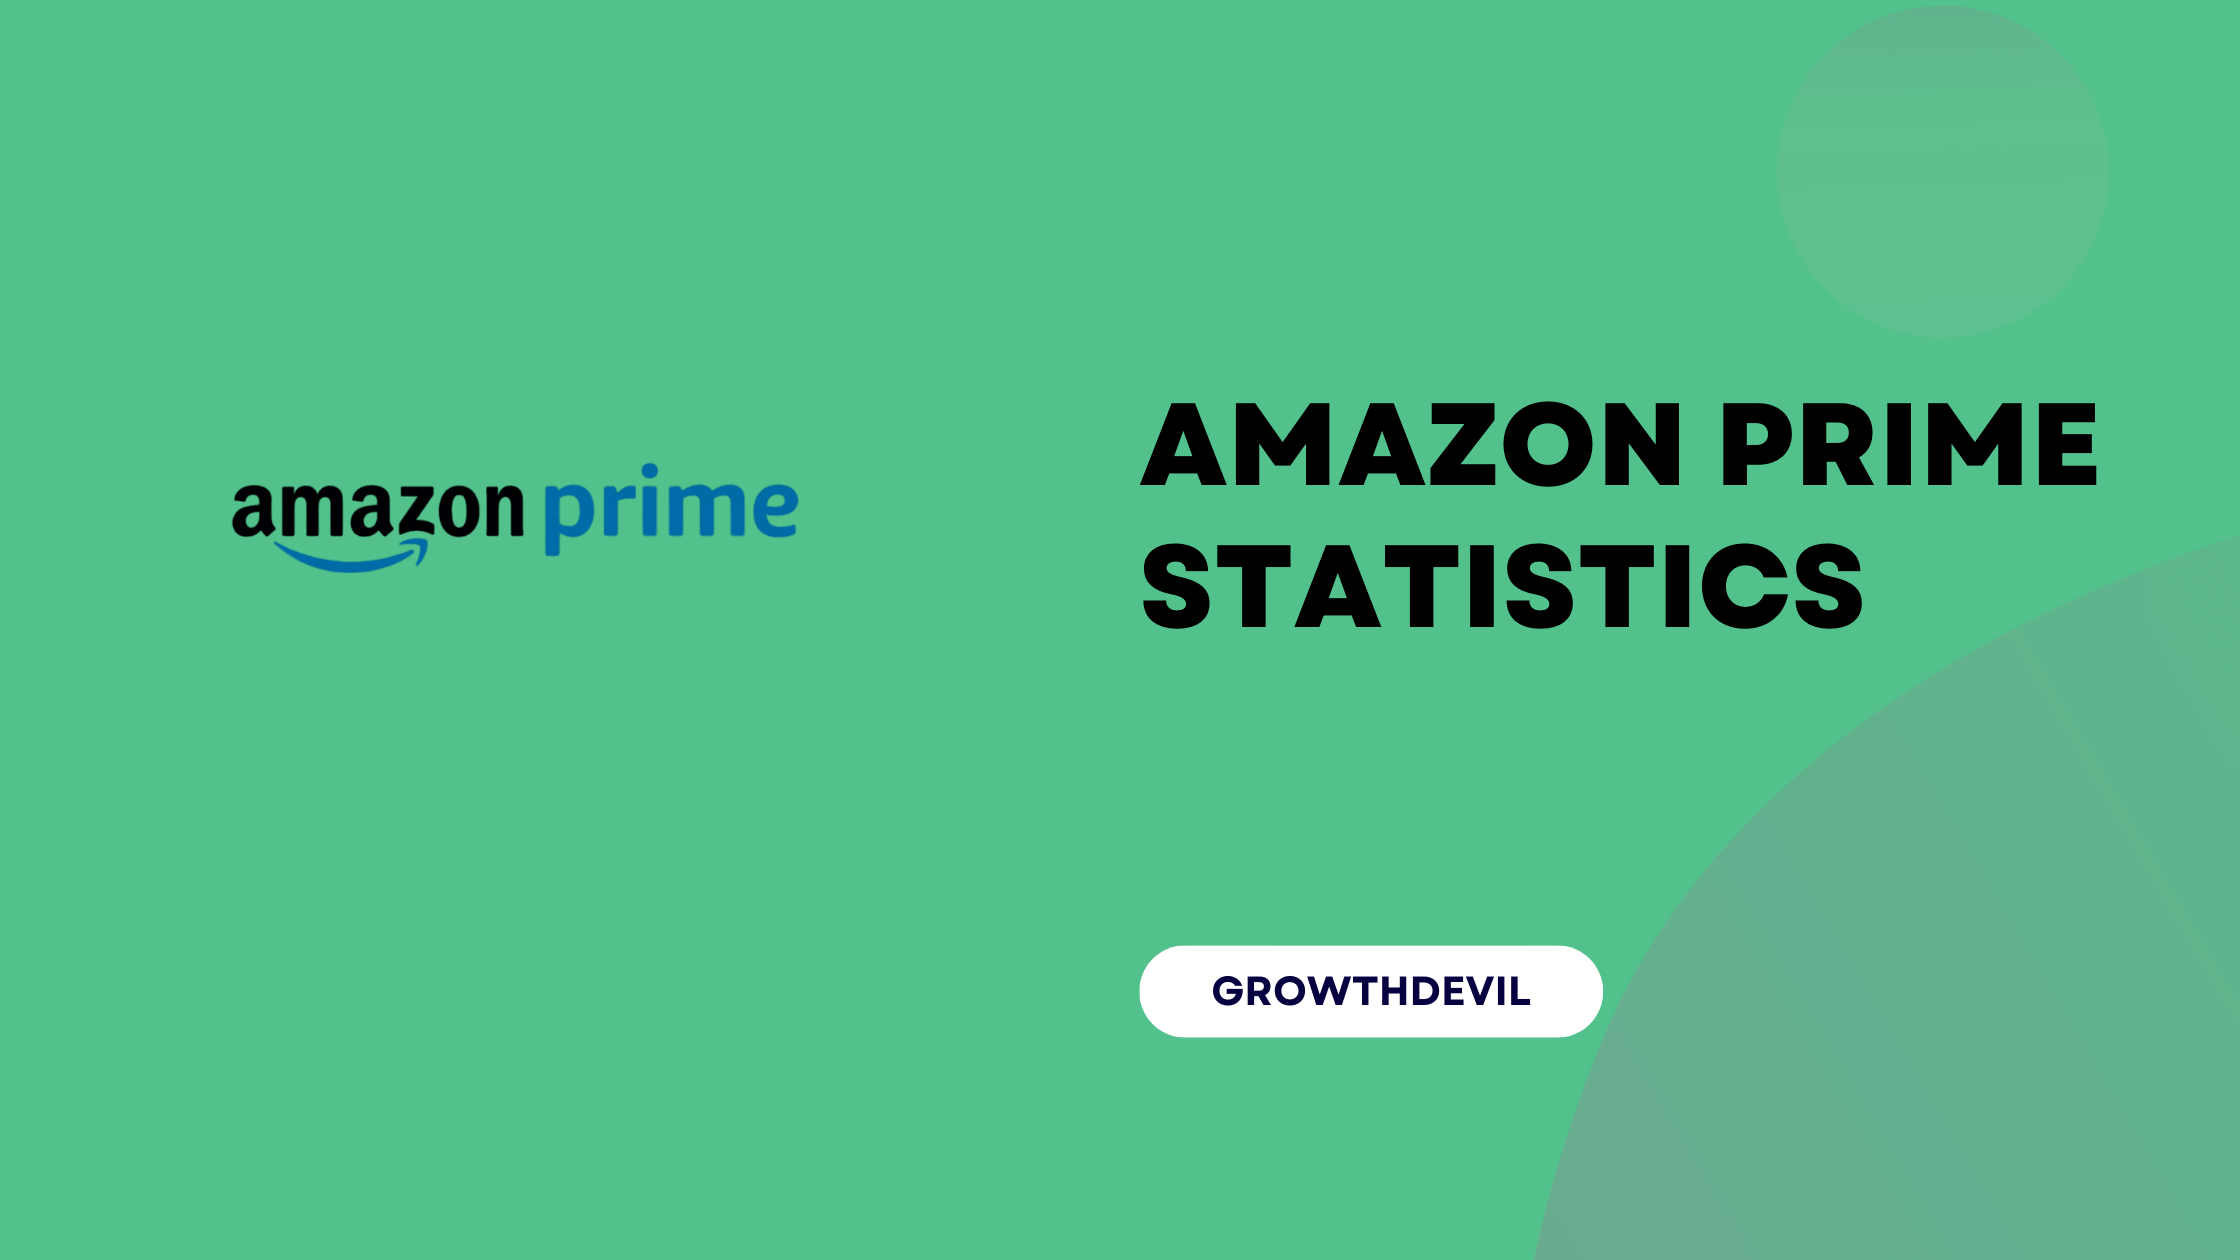 Amazon Prime Statistics - GrowthDevil